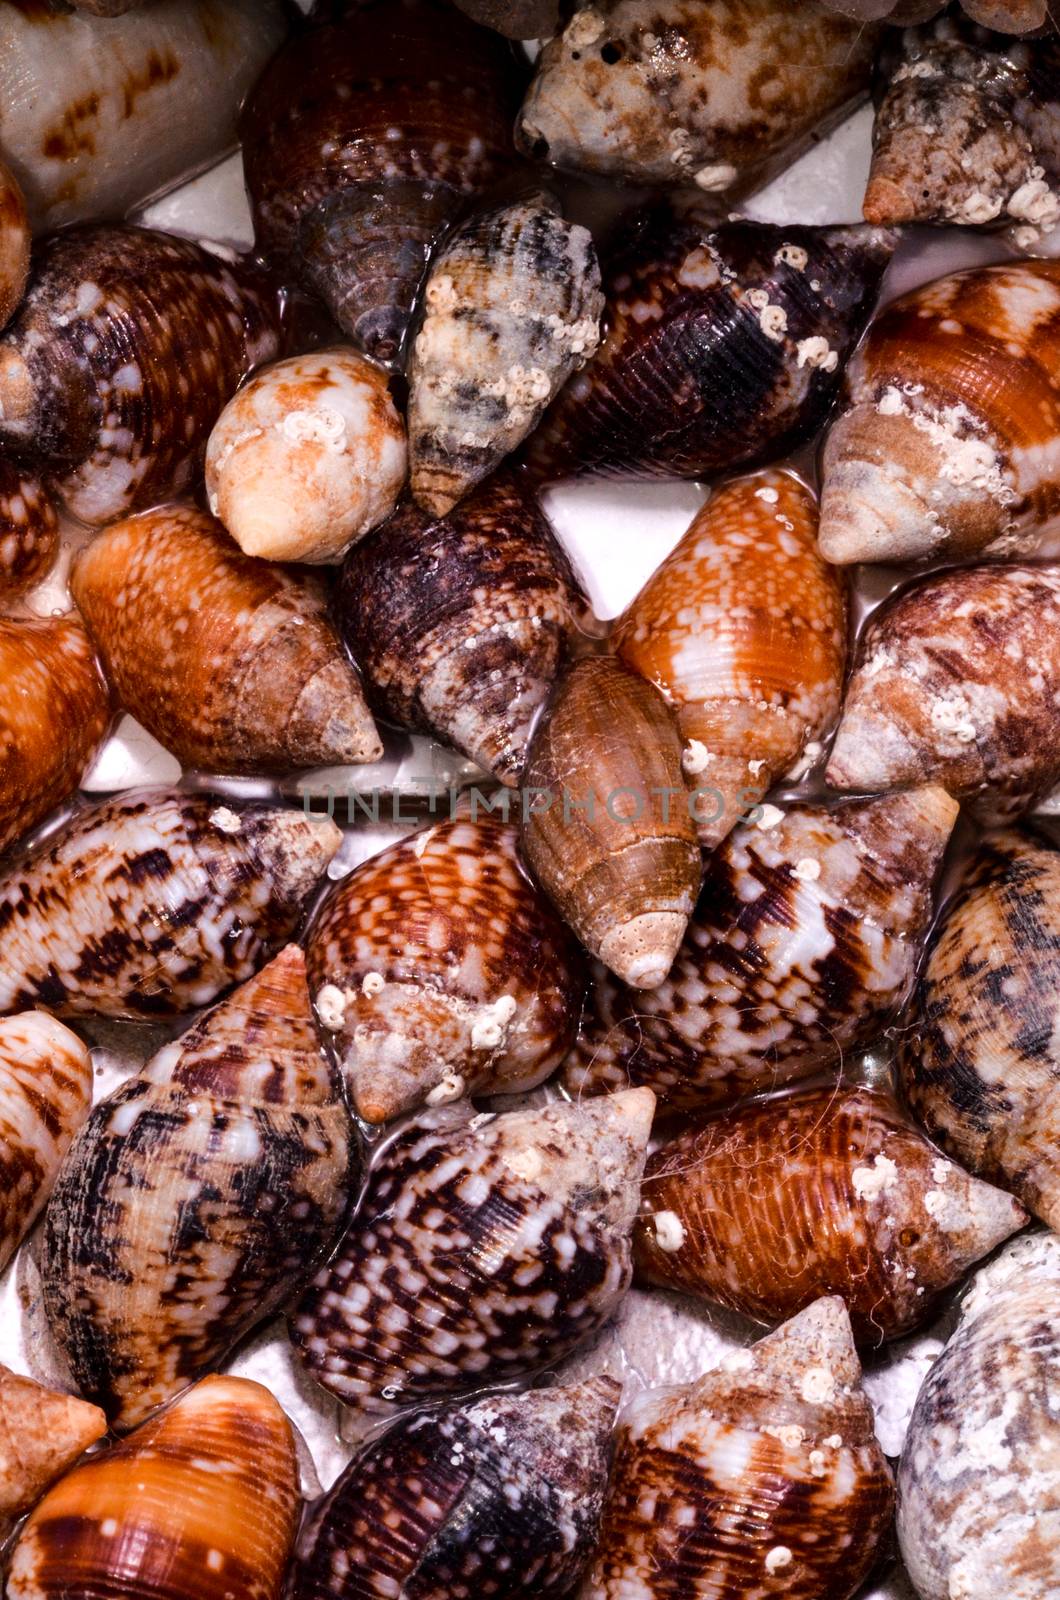 Background of sea shells by underworld